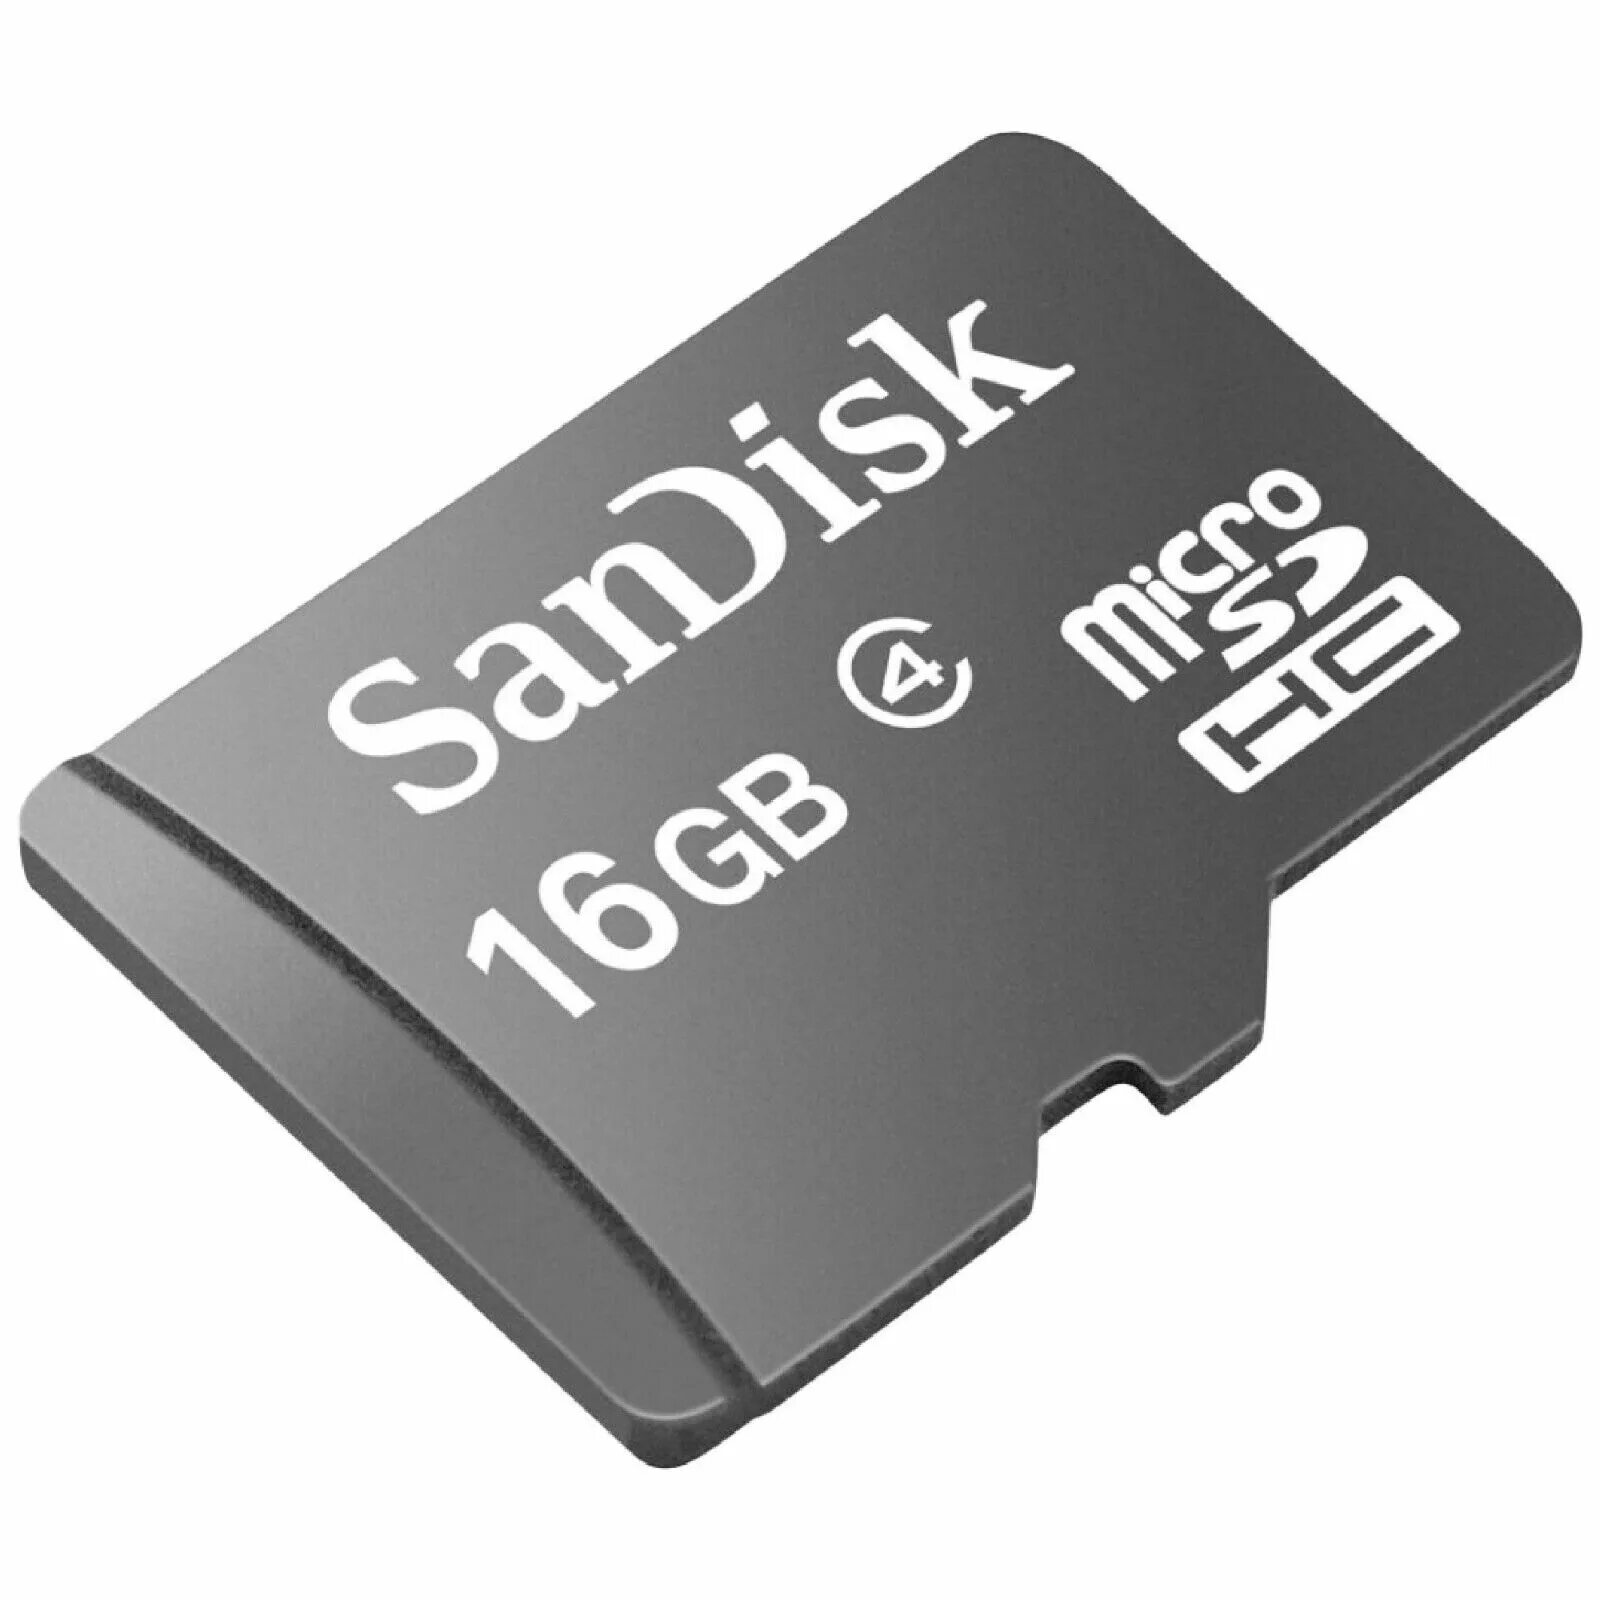 Карта памяти 4. SANDISK MICROSD 32 упаковка. Micro secure Digital Card (Trans Flash) 32gb hc10 Apacer. SD Card 8gb kinomax.